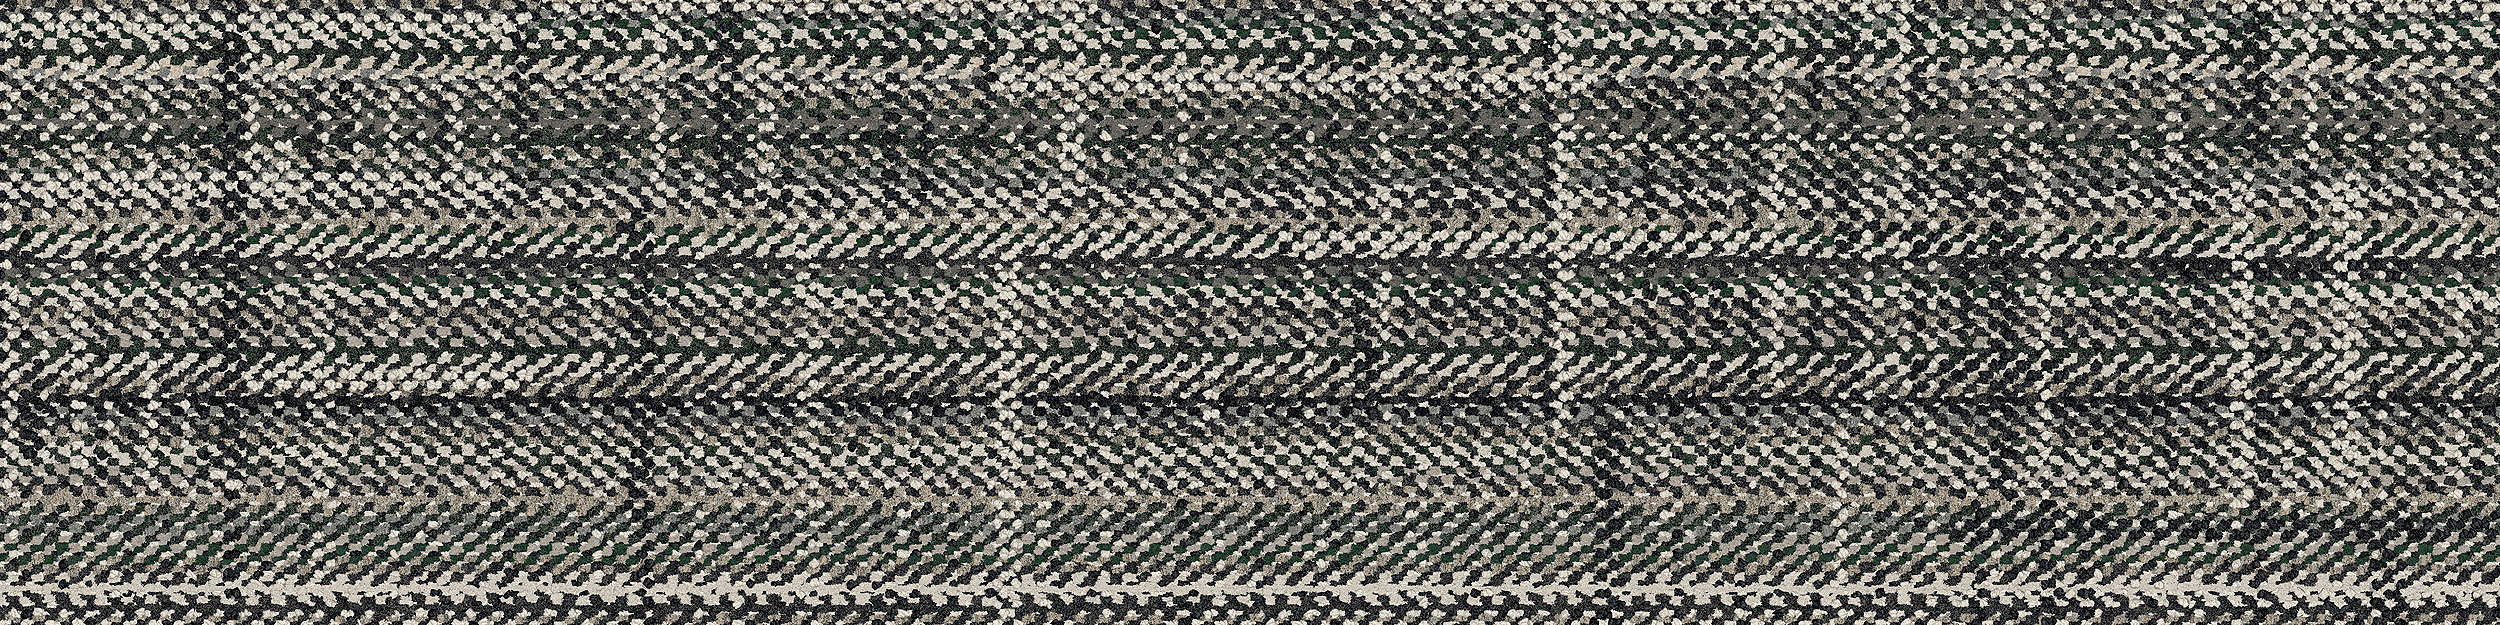 French Seams Carpet Tile In Compiegne imagen número 7